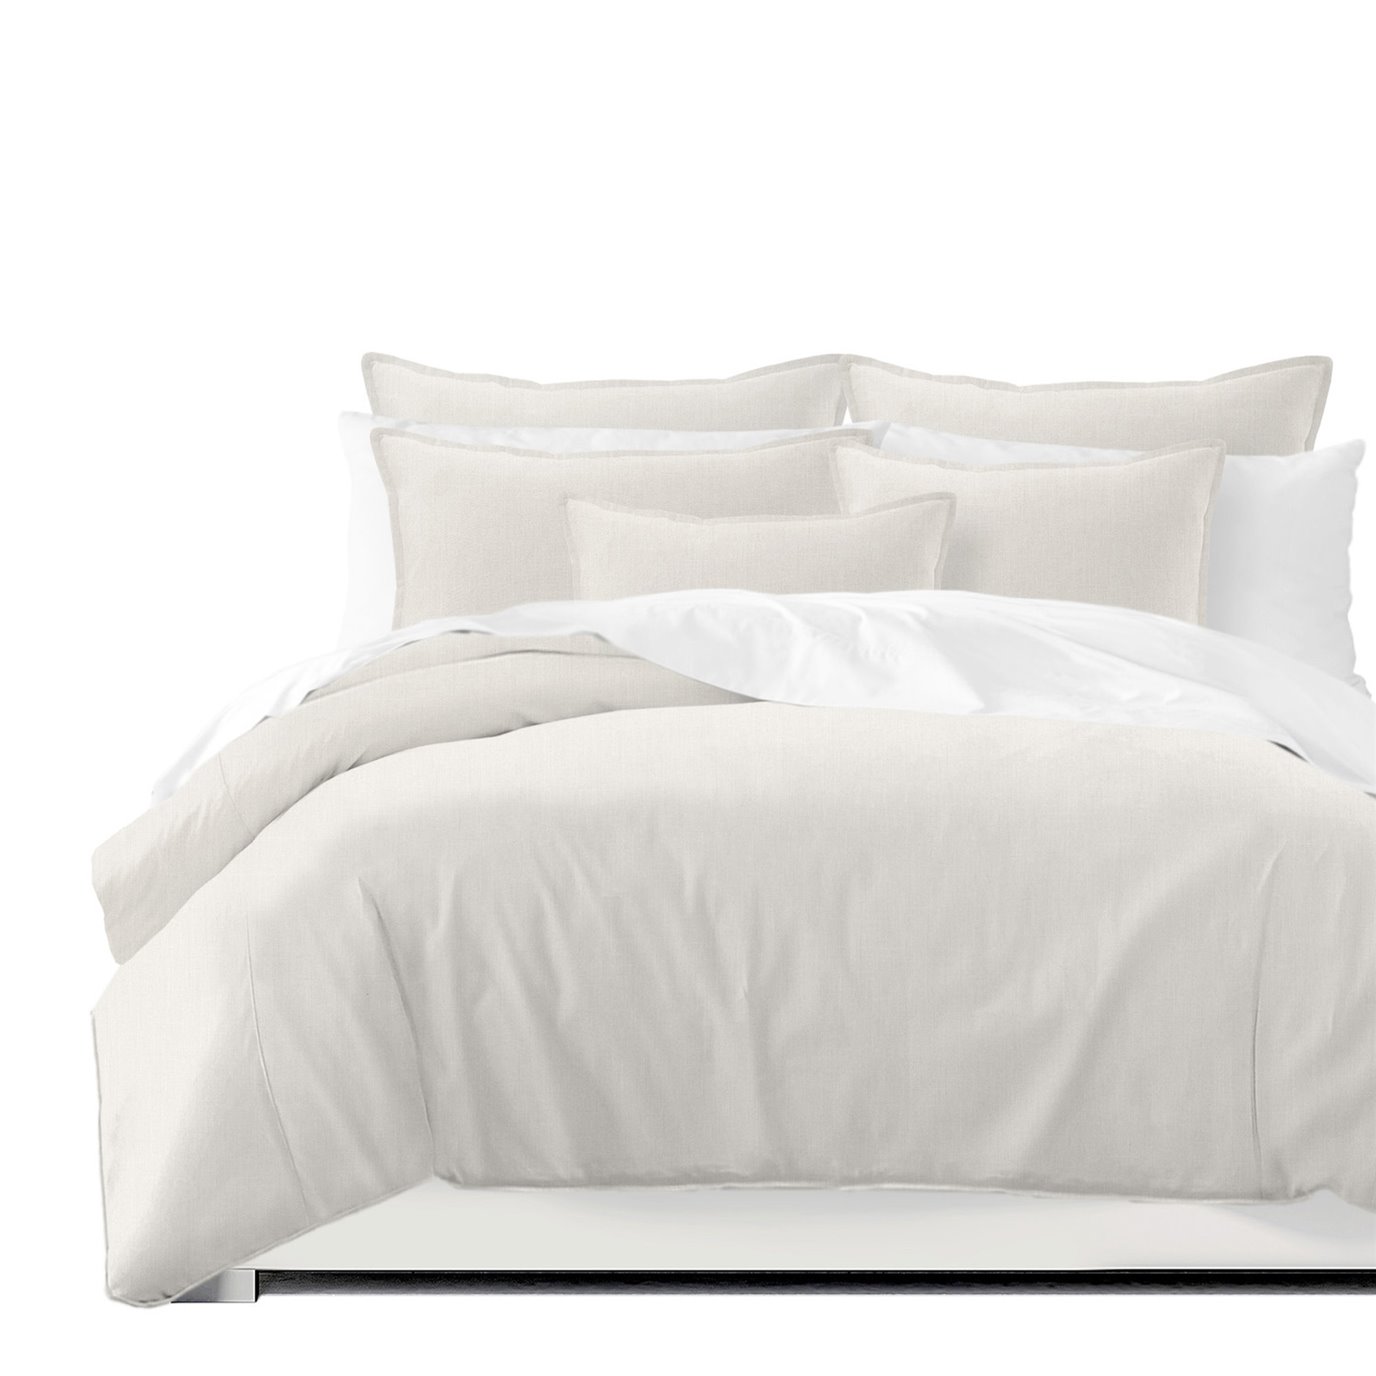 Sutton Pearl Comforter and Pillow Sham(s) Set - Size Super Queen